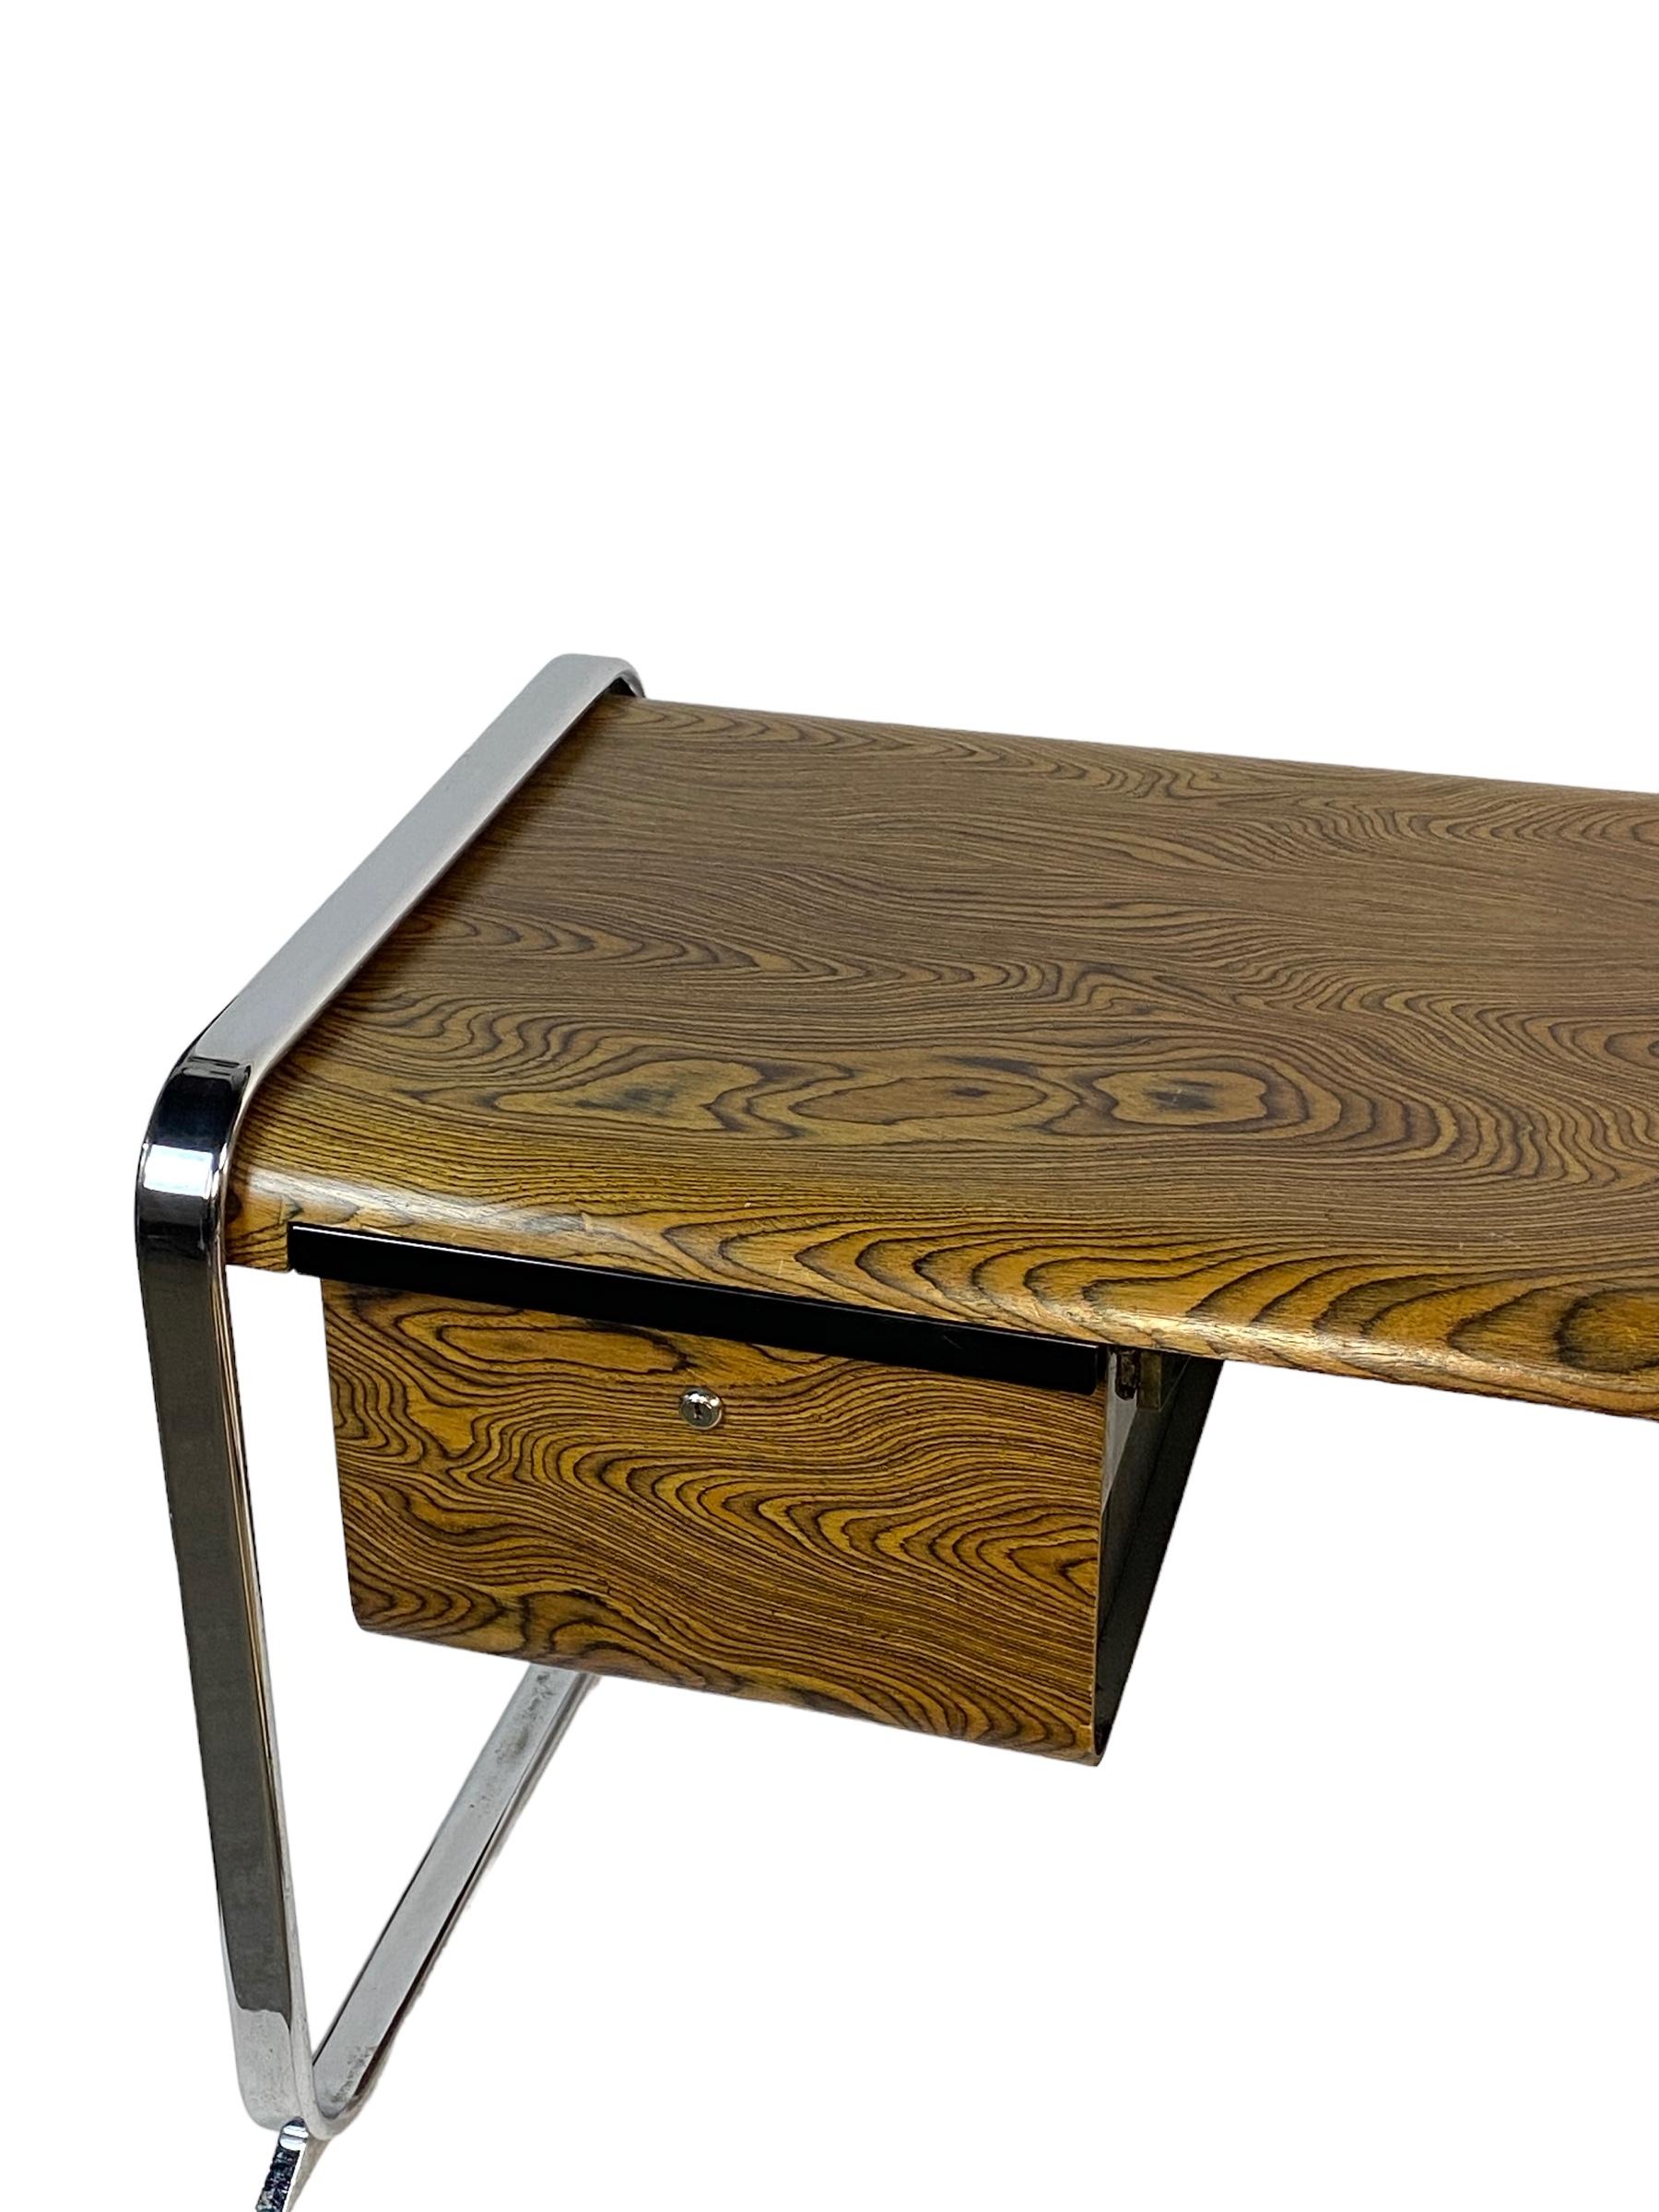 Herman Miller Zebra Wood and Chrome Desk Designed by Peter Protzman 2